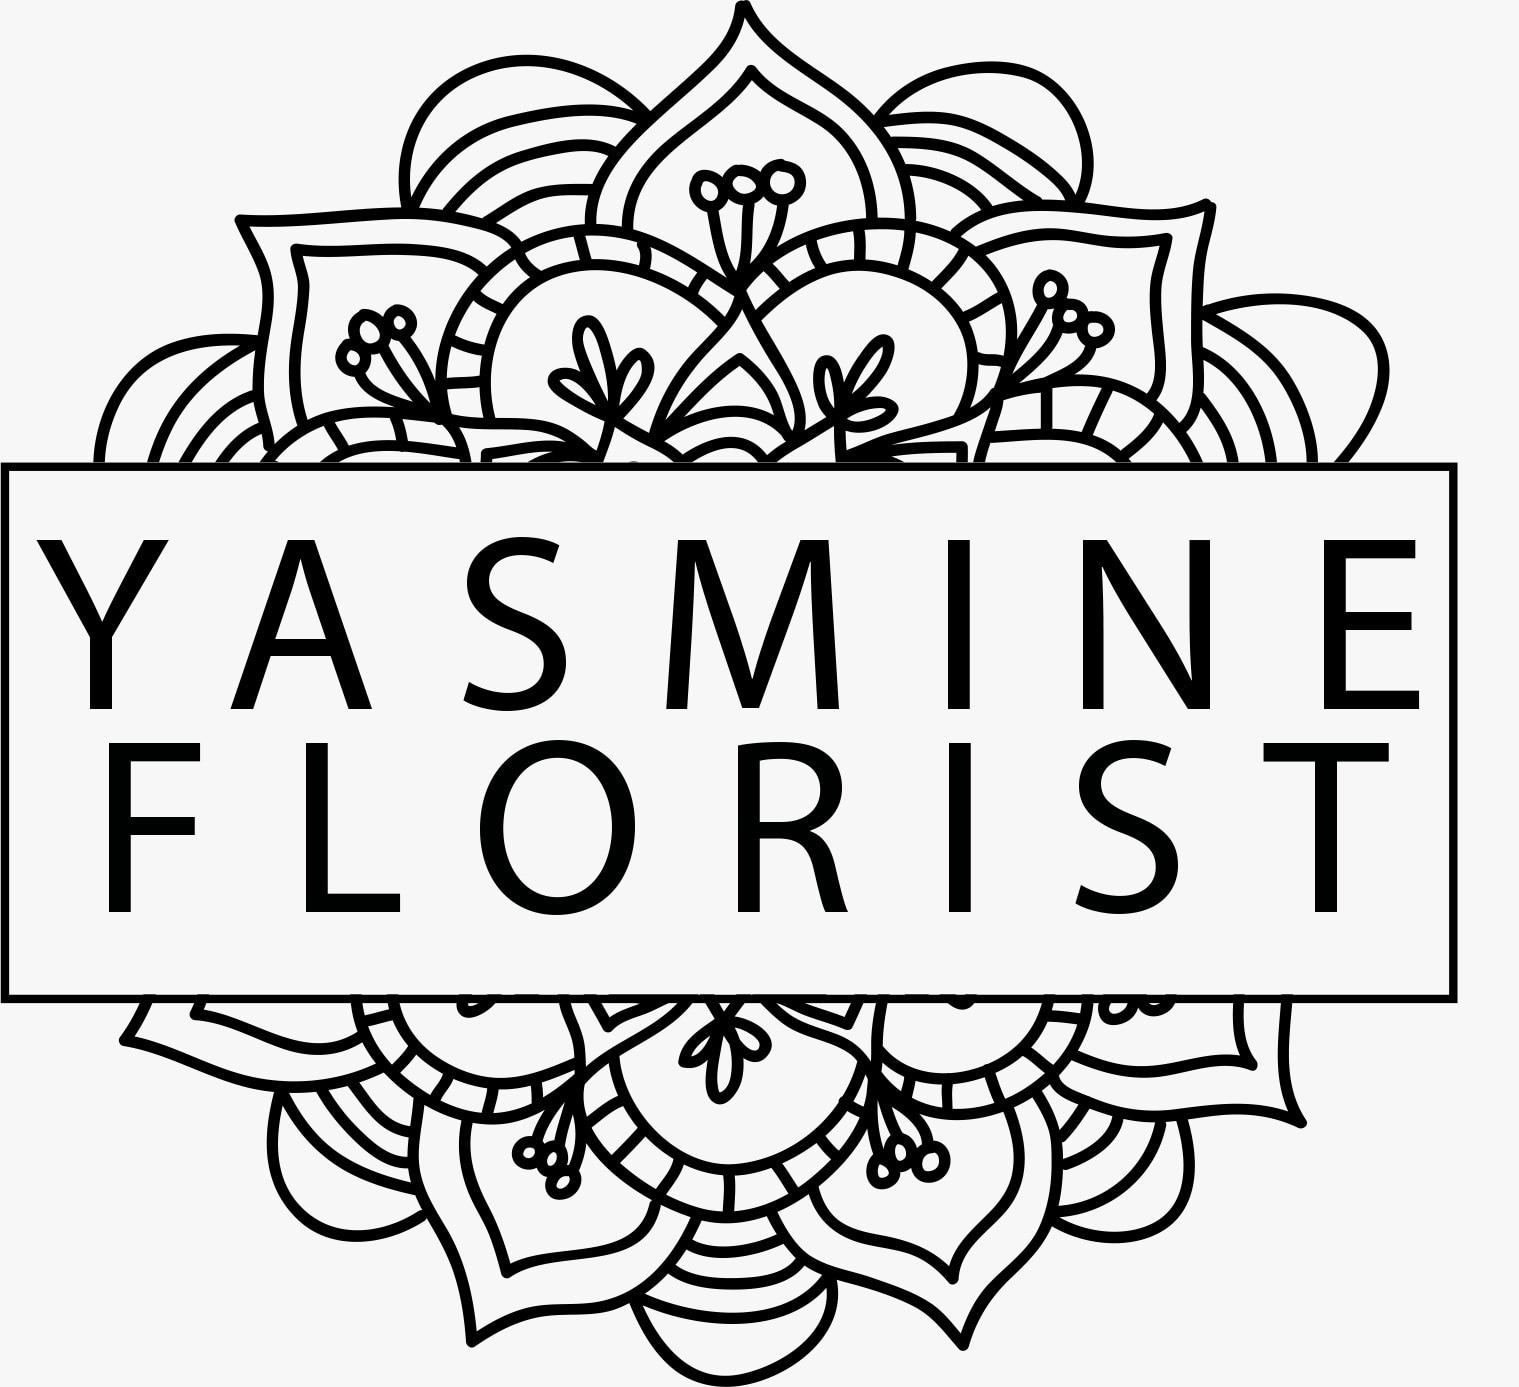 edgware Florist - Flower Delivery by Yasmine Florist